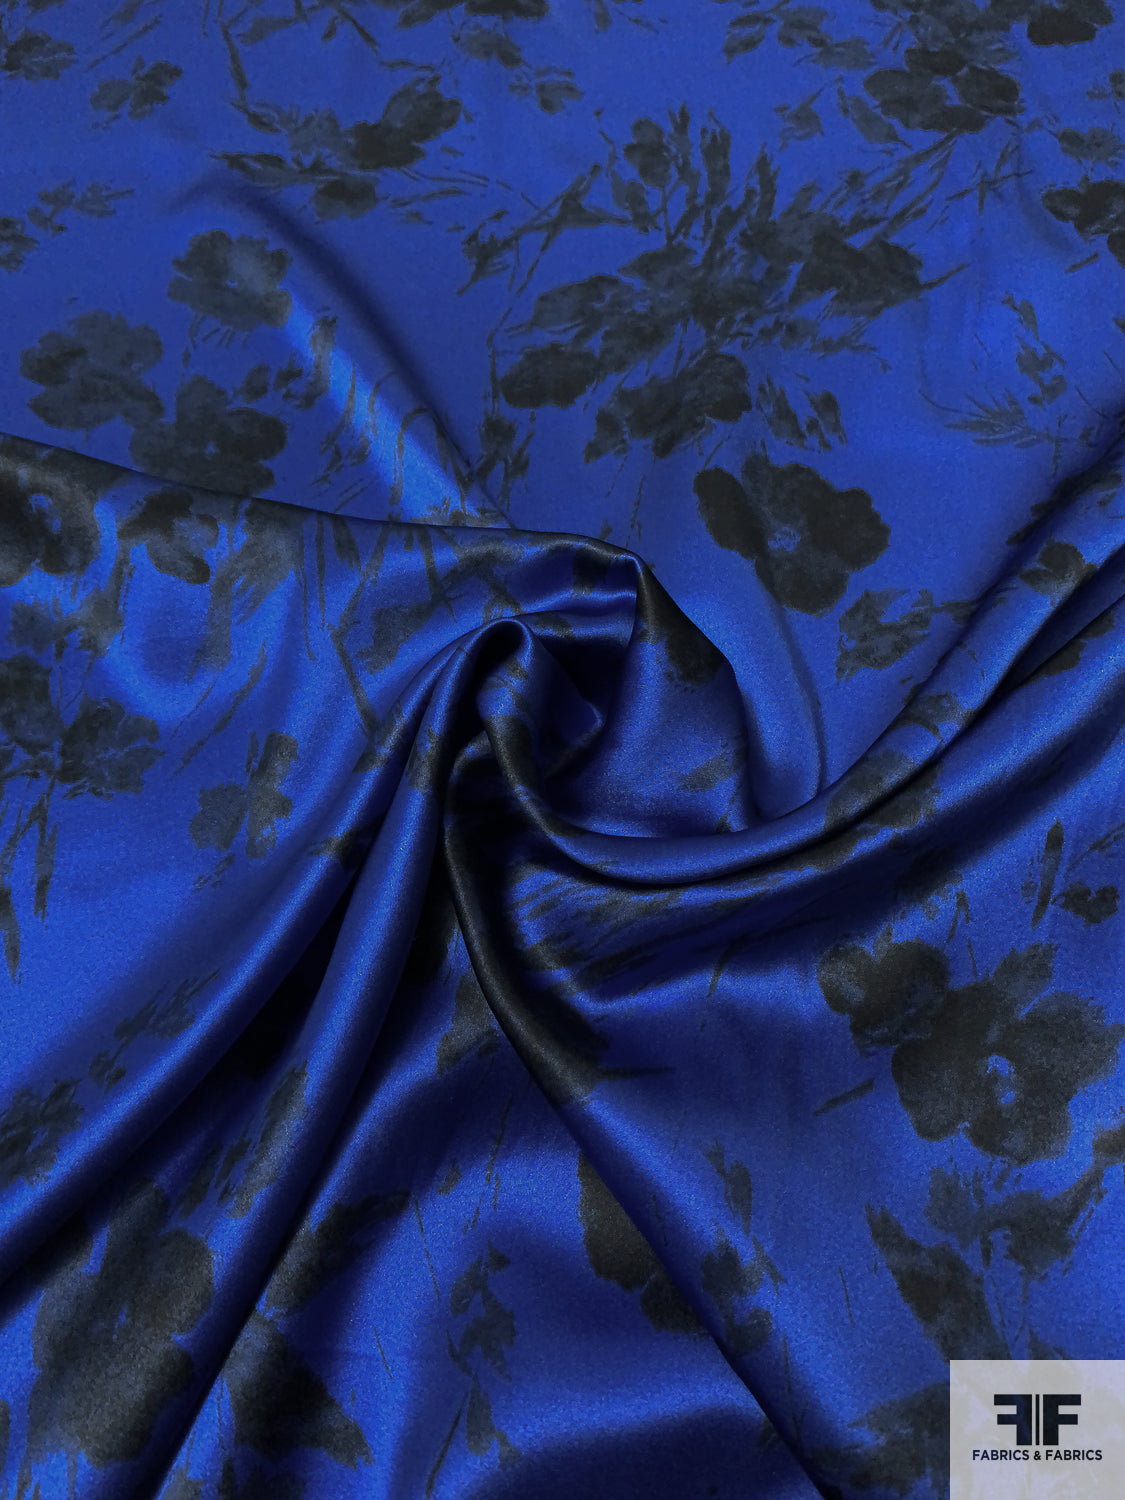 Romantic Floral Printed Silk Charmeuse - Royal Blue / Black